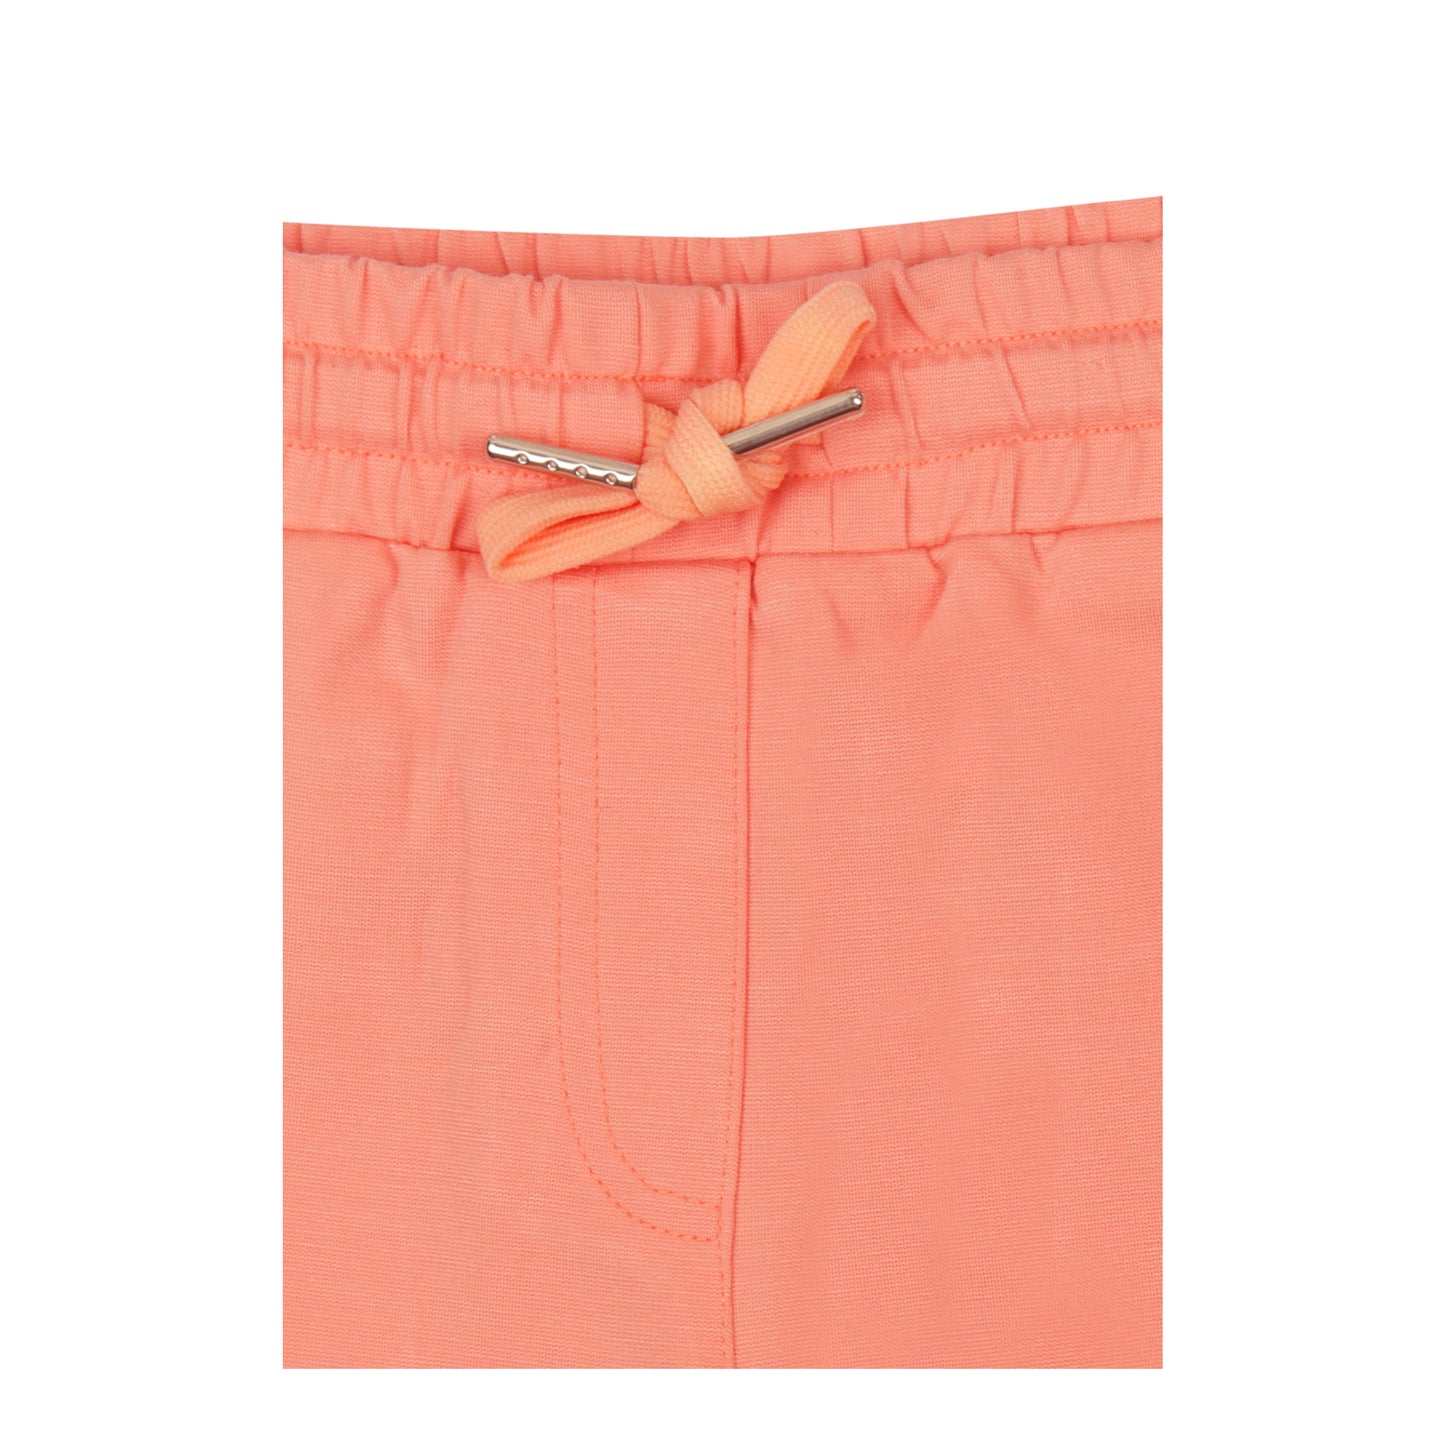 Basic Peach Tiny Girl Shorts